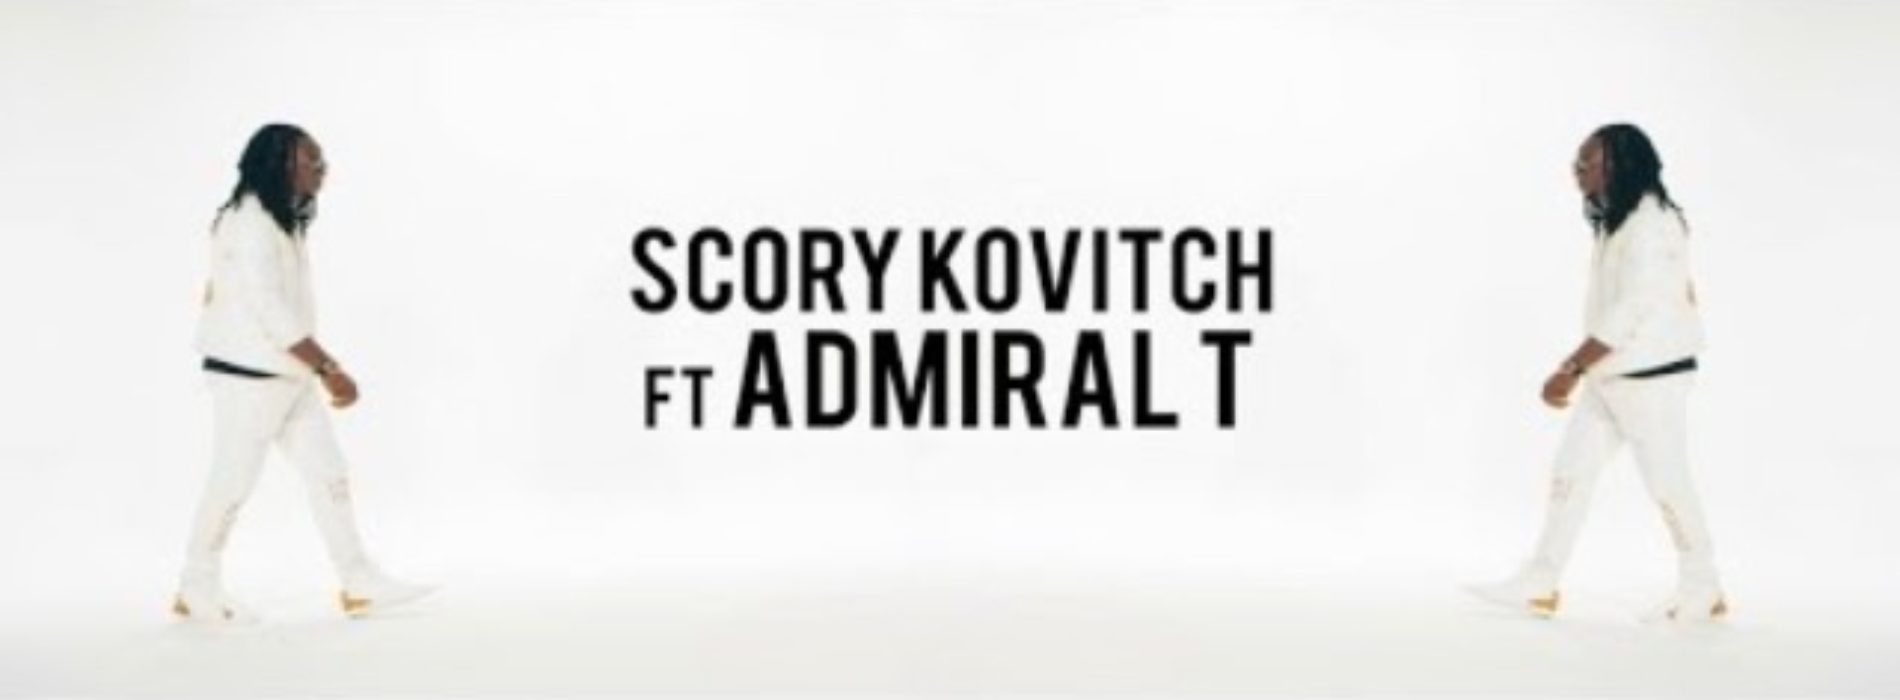 SCORY KOVITCH Feat ADMIRAL T, le Clip – Feels Great – Mars 2018